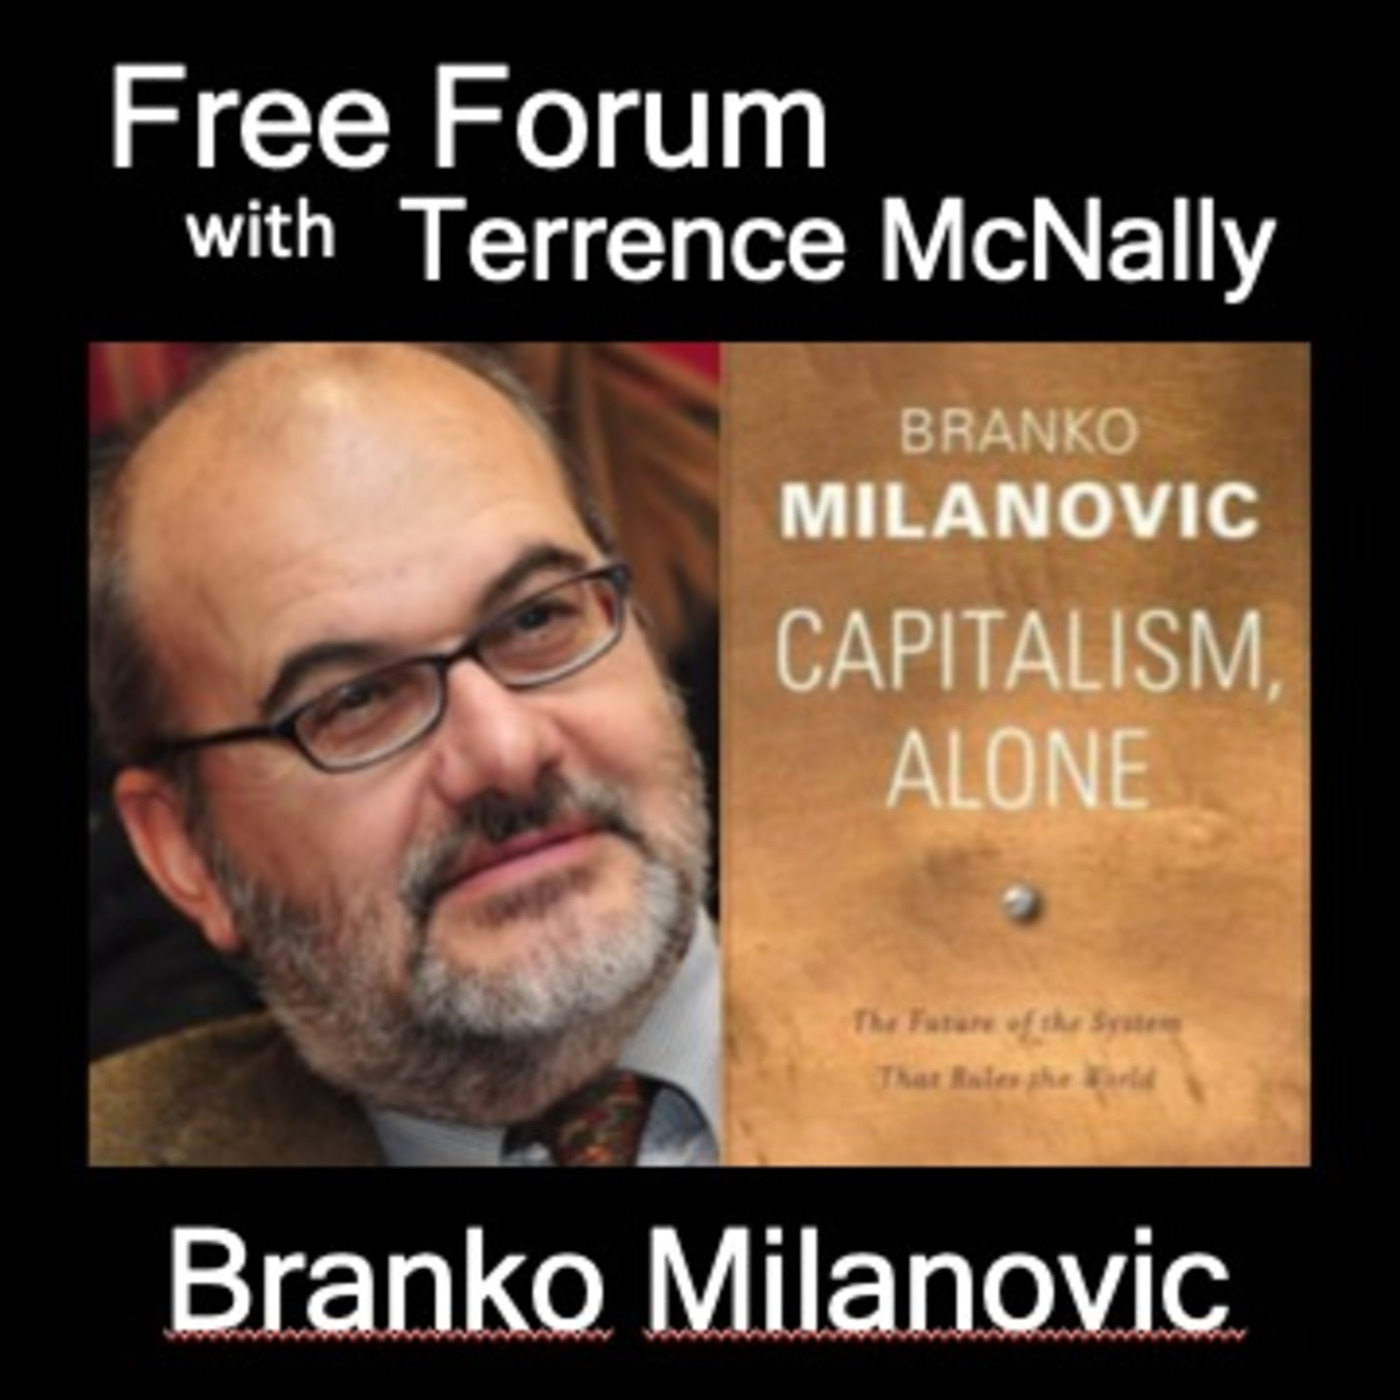 BRANKO MILANOVIC-Capitalism Rules the World-How do we shrink inequality?